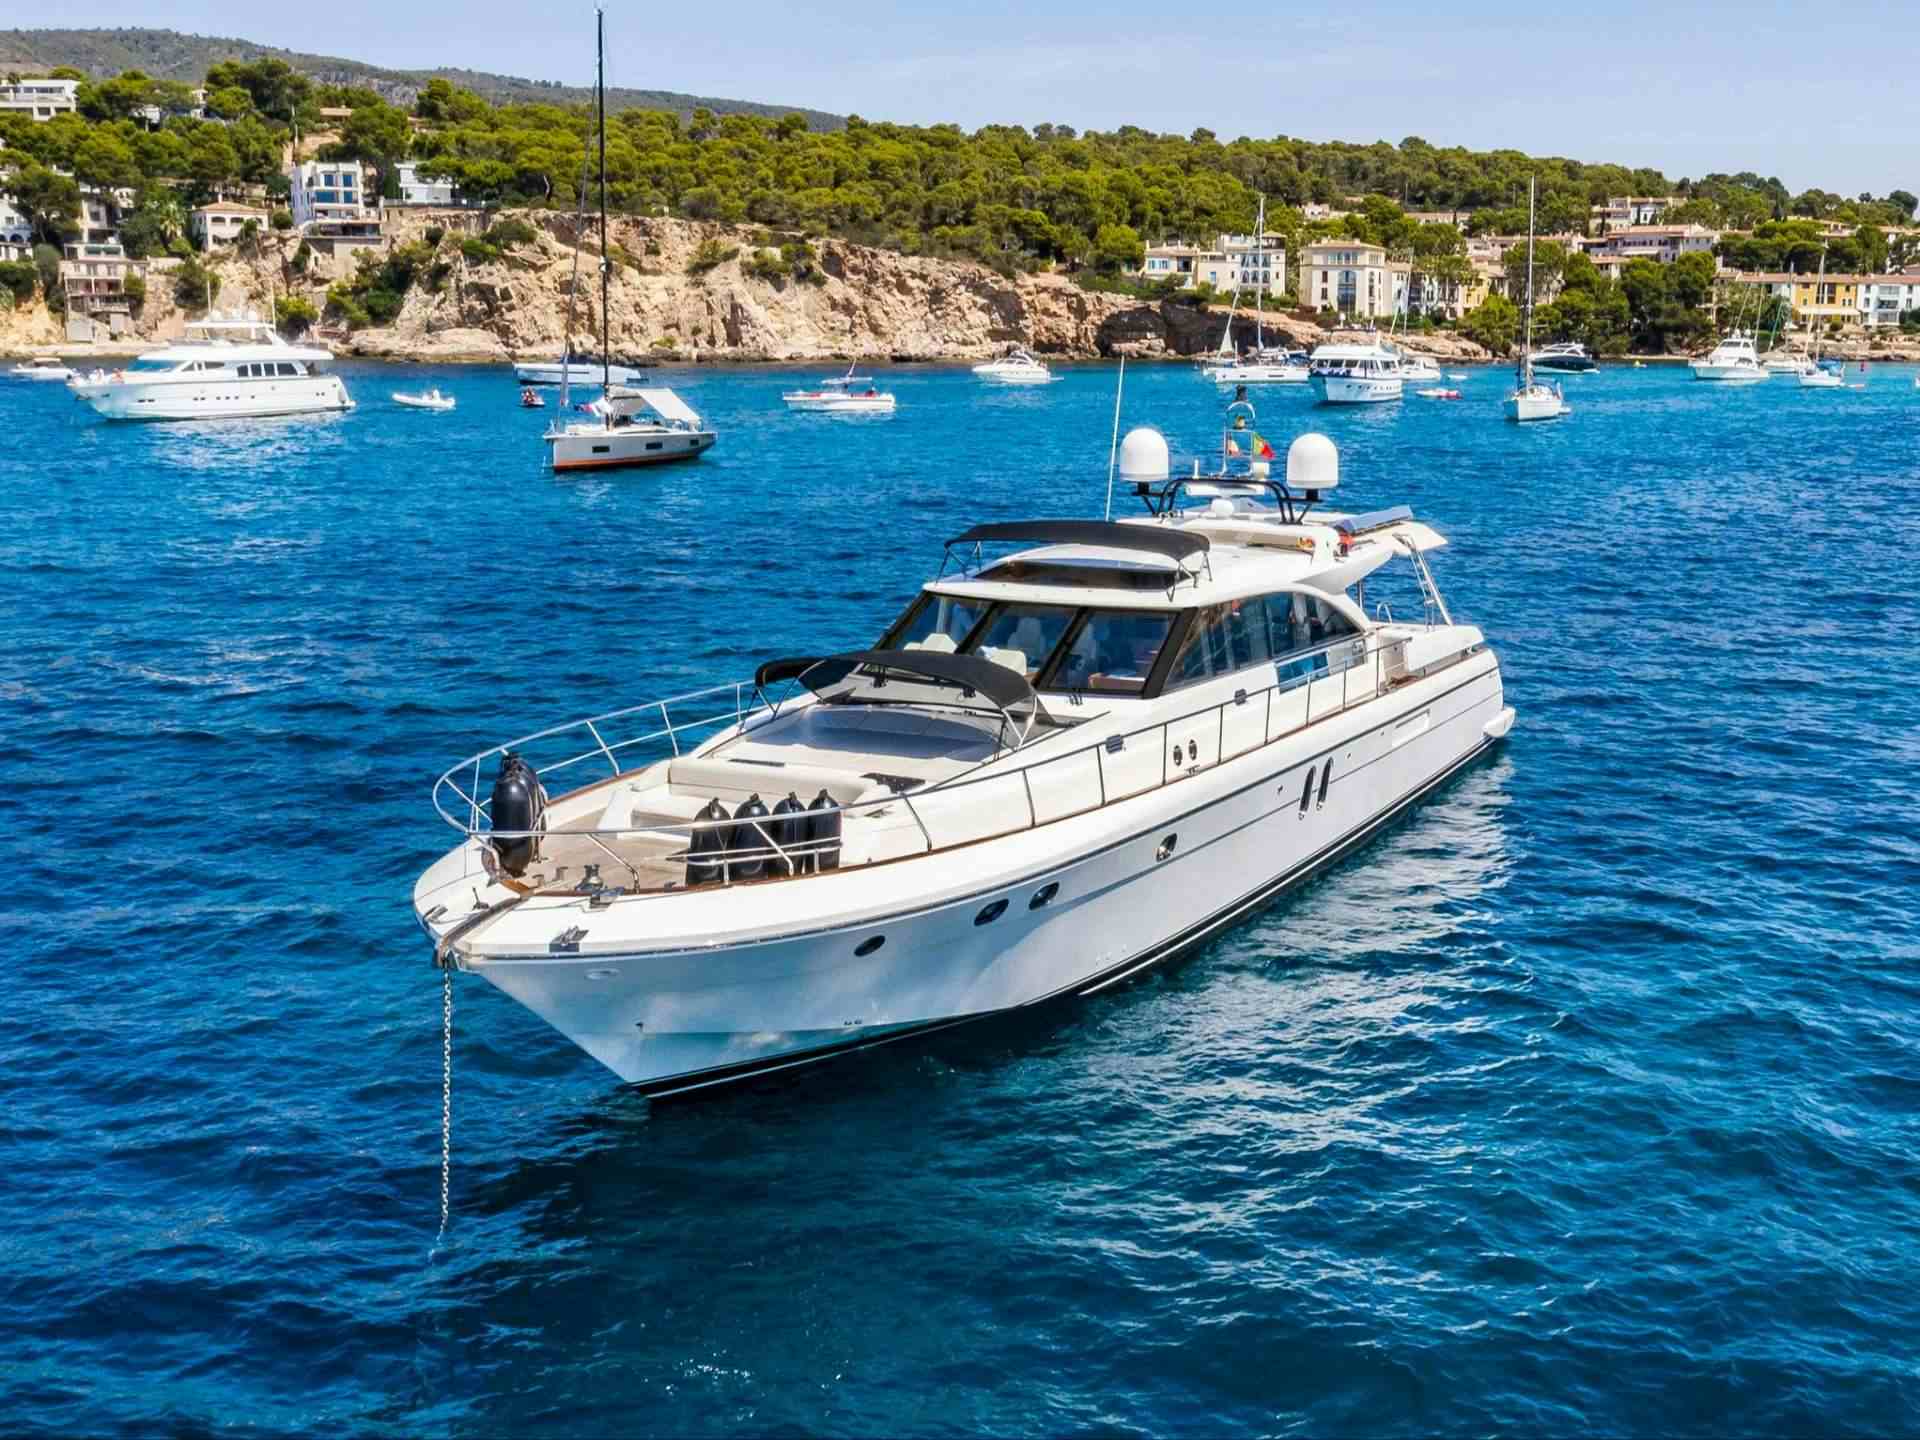 PARODIA II - Yacht Charter Tenerife & Boat hire in W. Med -Naples/Sicily, W. Med -Riviera/Cors/Sard., W. Med - Spain/Balearics 1